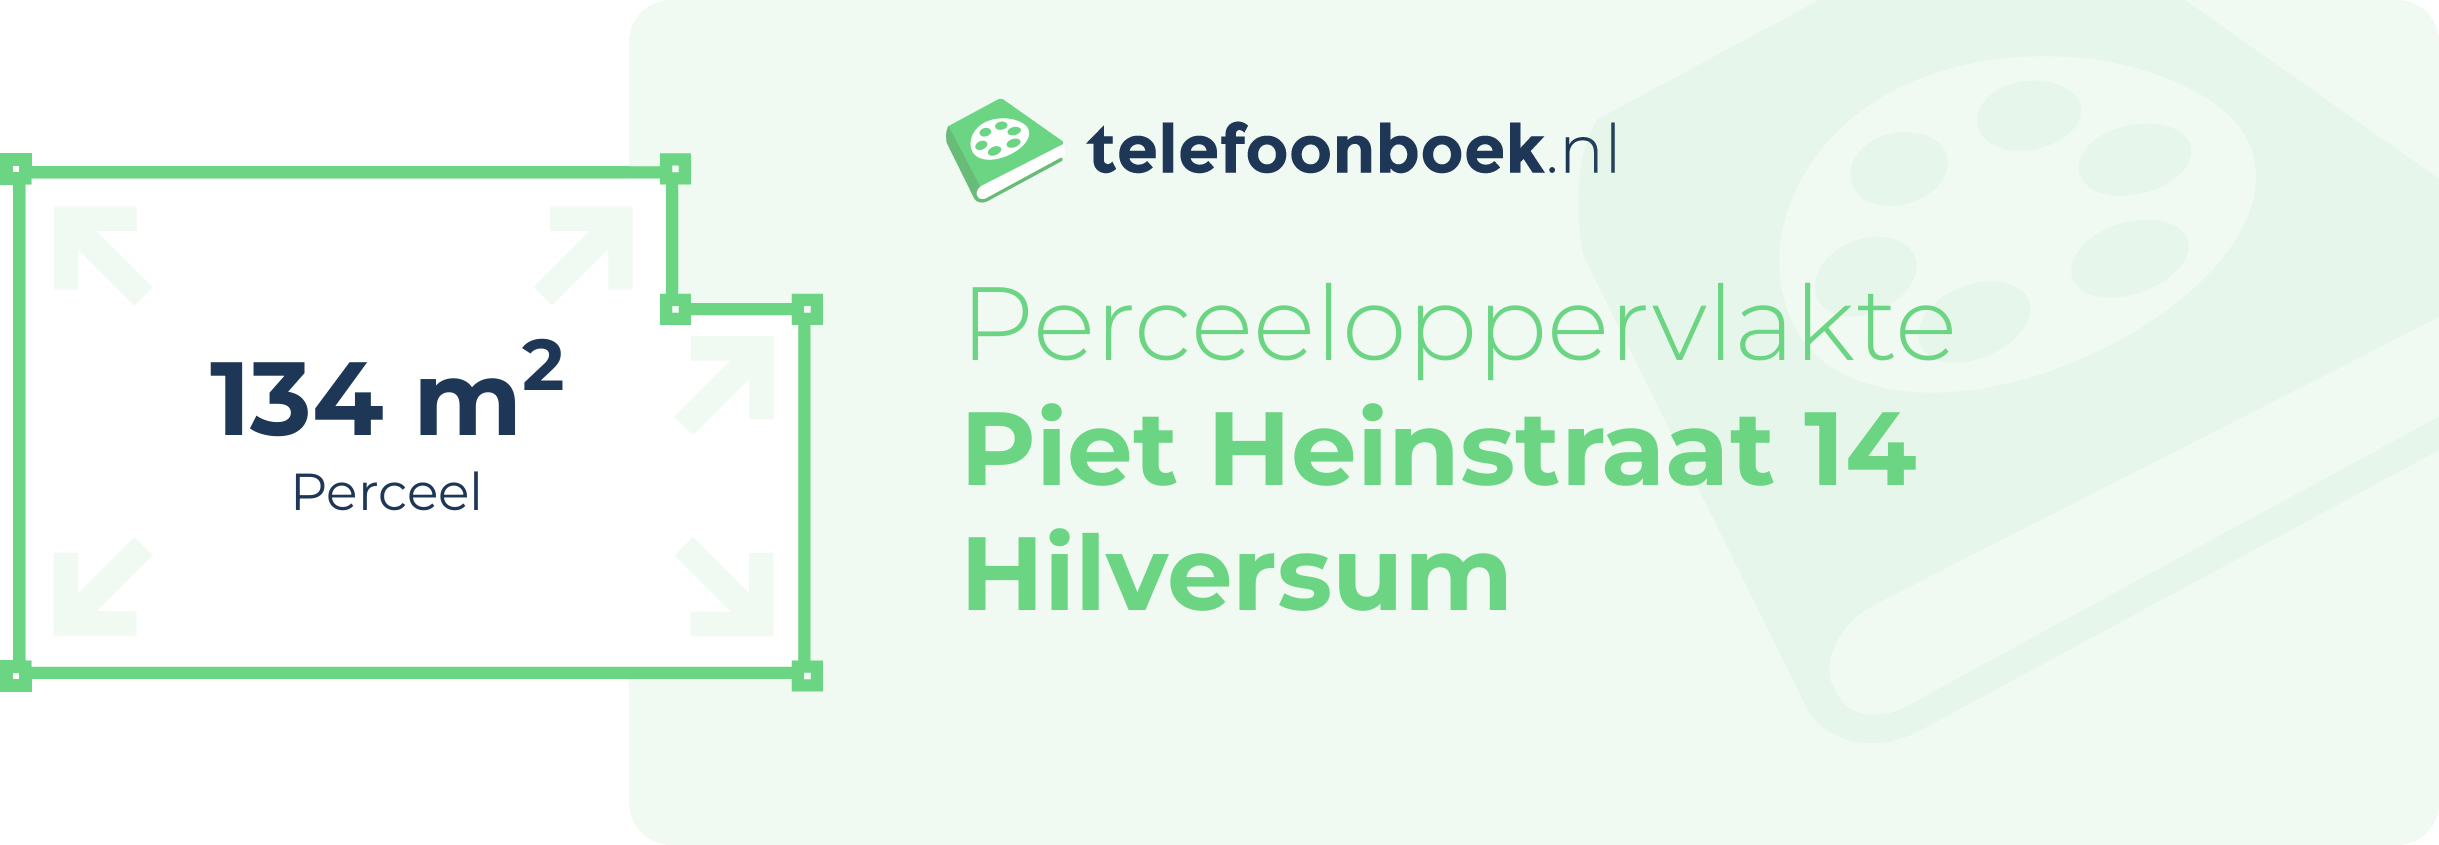 Perceeloppervlakte Piet Heinstraat 14 Hilversum